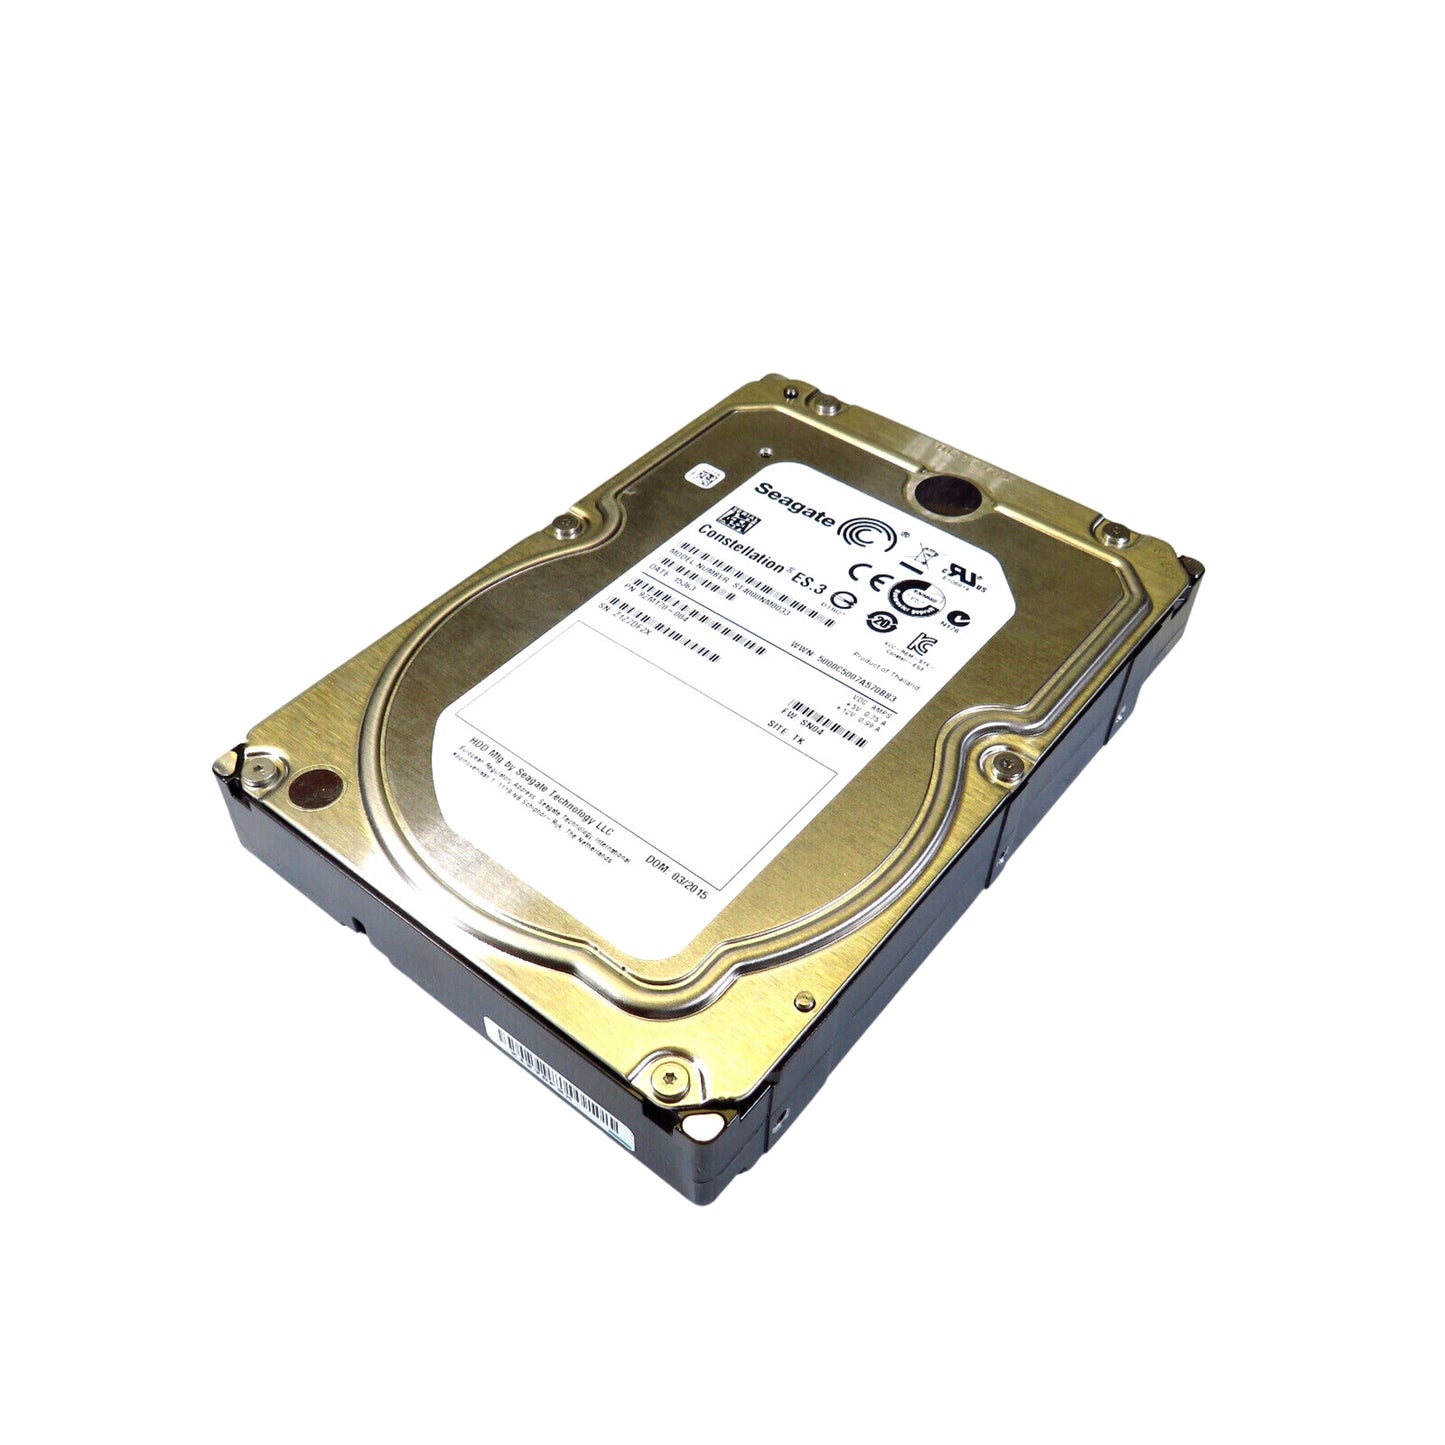 Seagate ST4000NM0033 3.5" 4TB 7200RPM SATA III Hard Disk Drive (HDD), Silver (Refurbished)